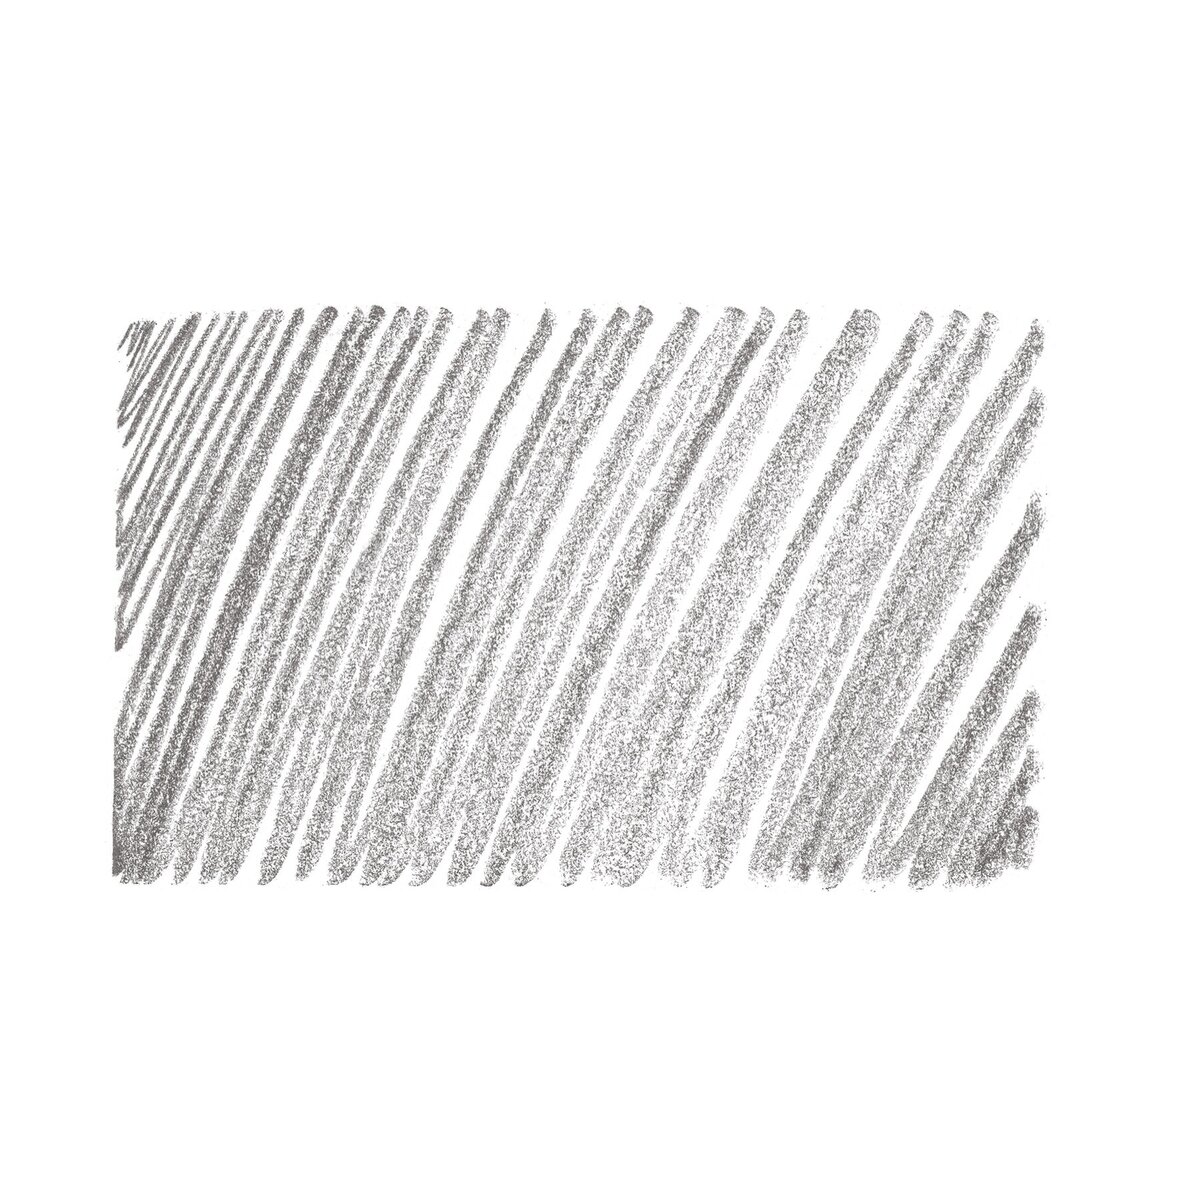 Staedtler Lumograph Drawing and Sketching Pencil - 2B